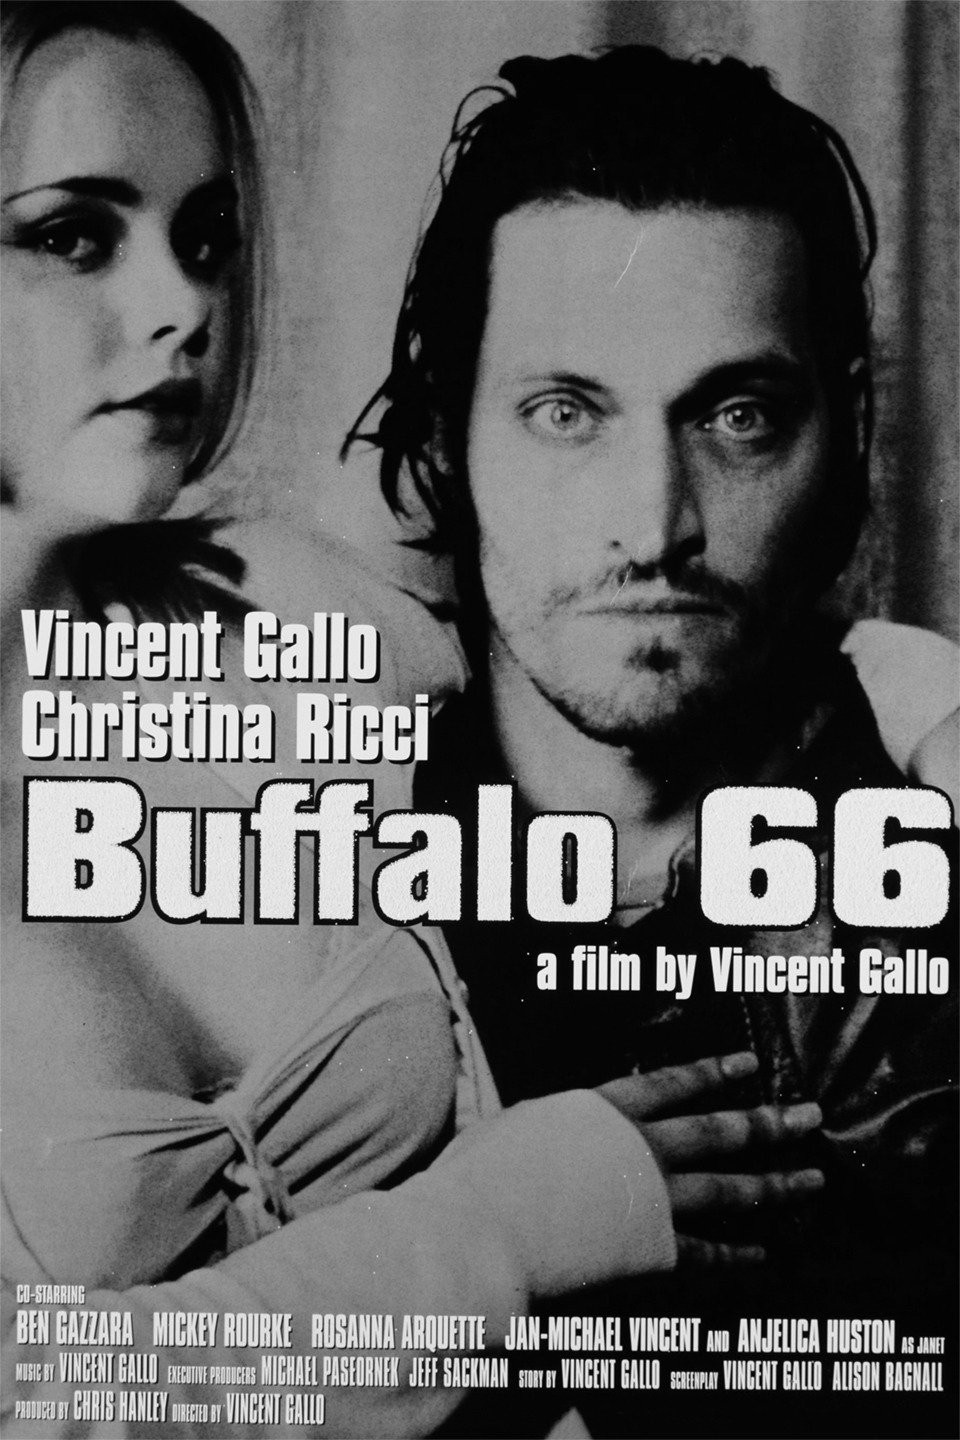 Buster and Billie (1974) Movie DVD Stars Jan-Michael Vincent